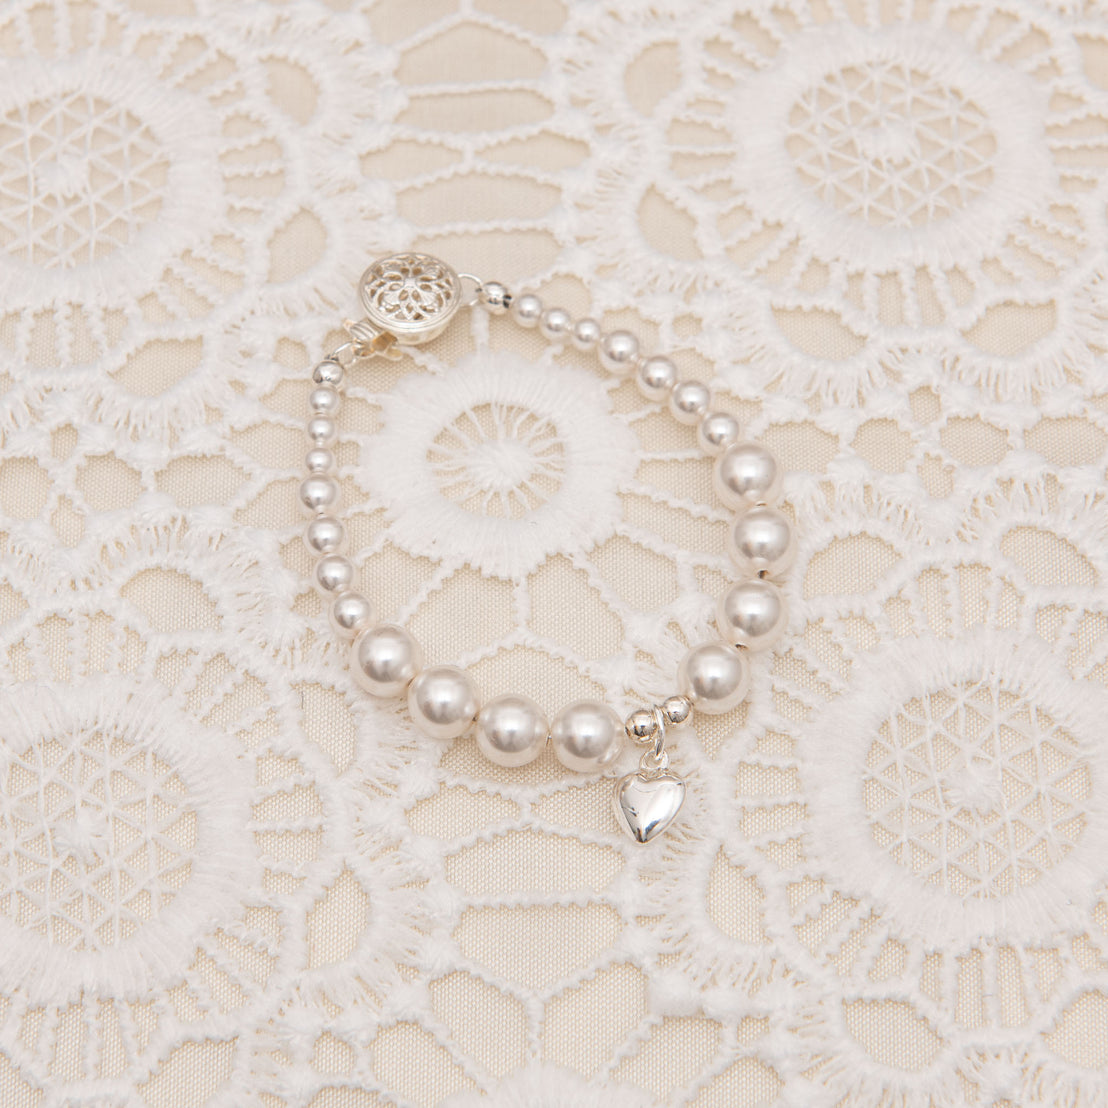 Baby jewelry bracelet with silver heart charm.